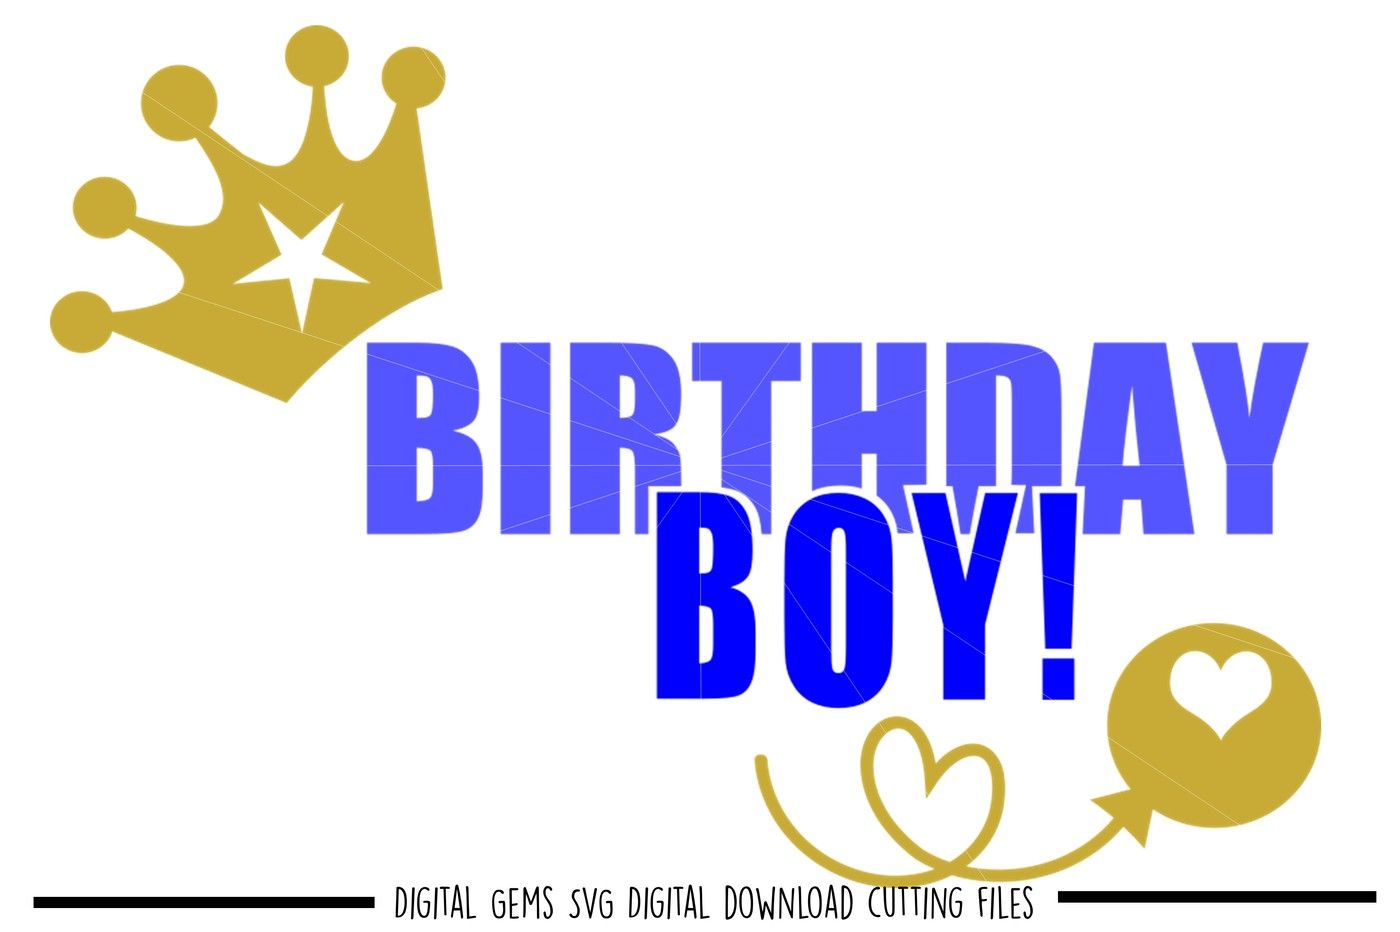 Download Birthday Boy SVG / DXF / EPS / PNG Files By Digital Gems ...